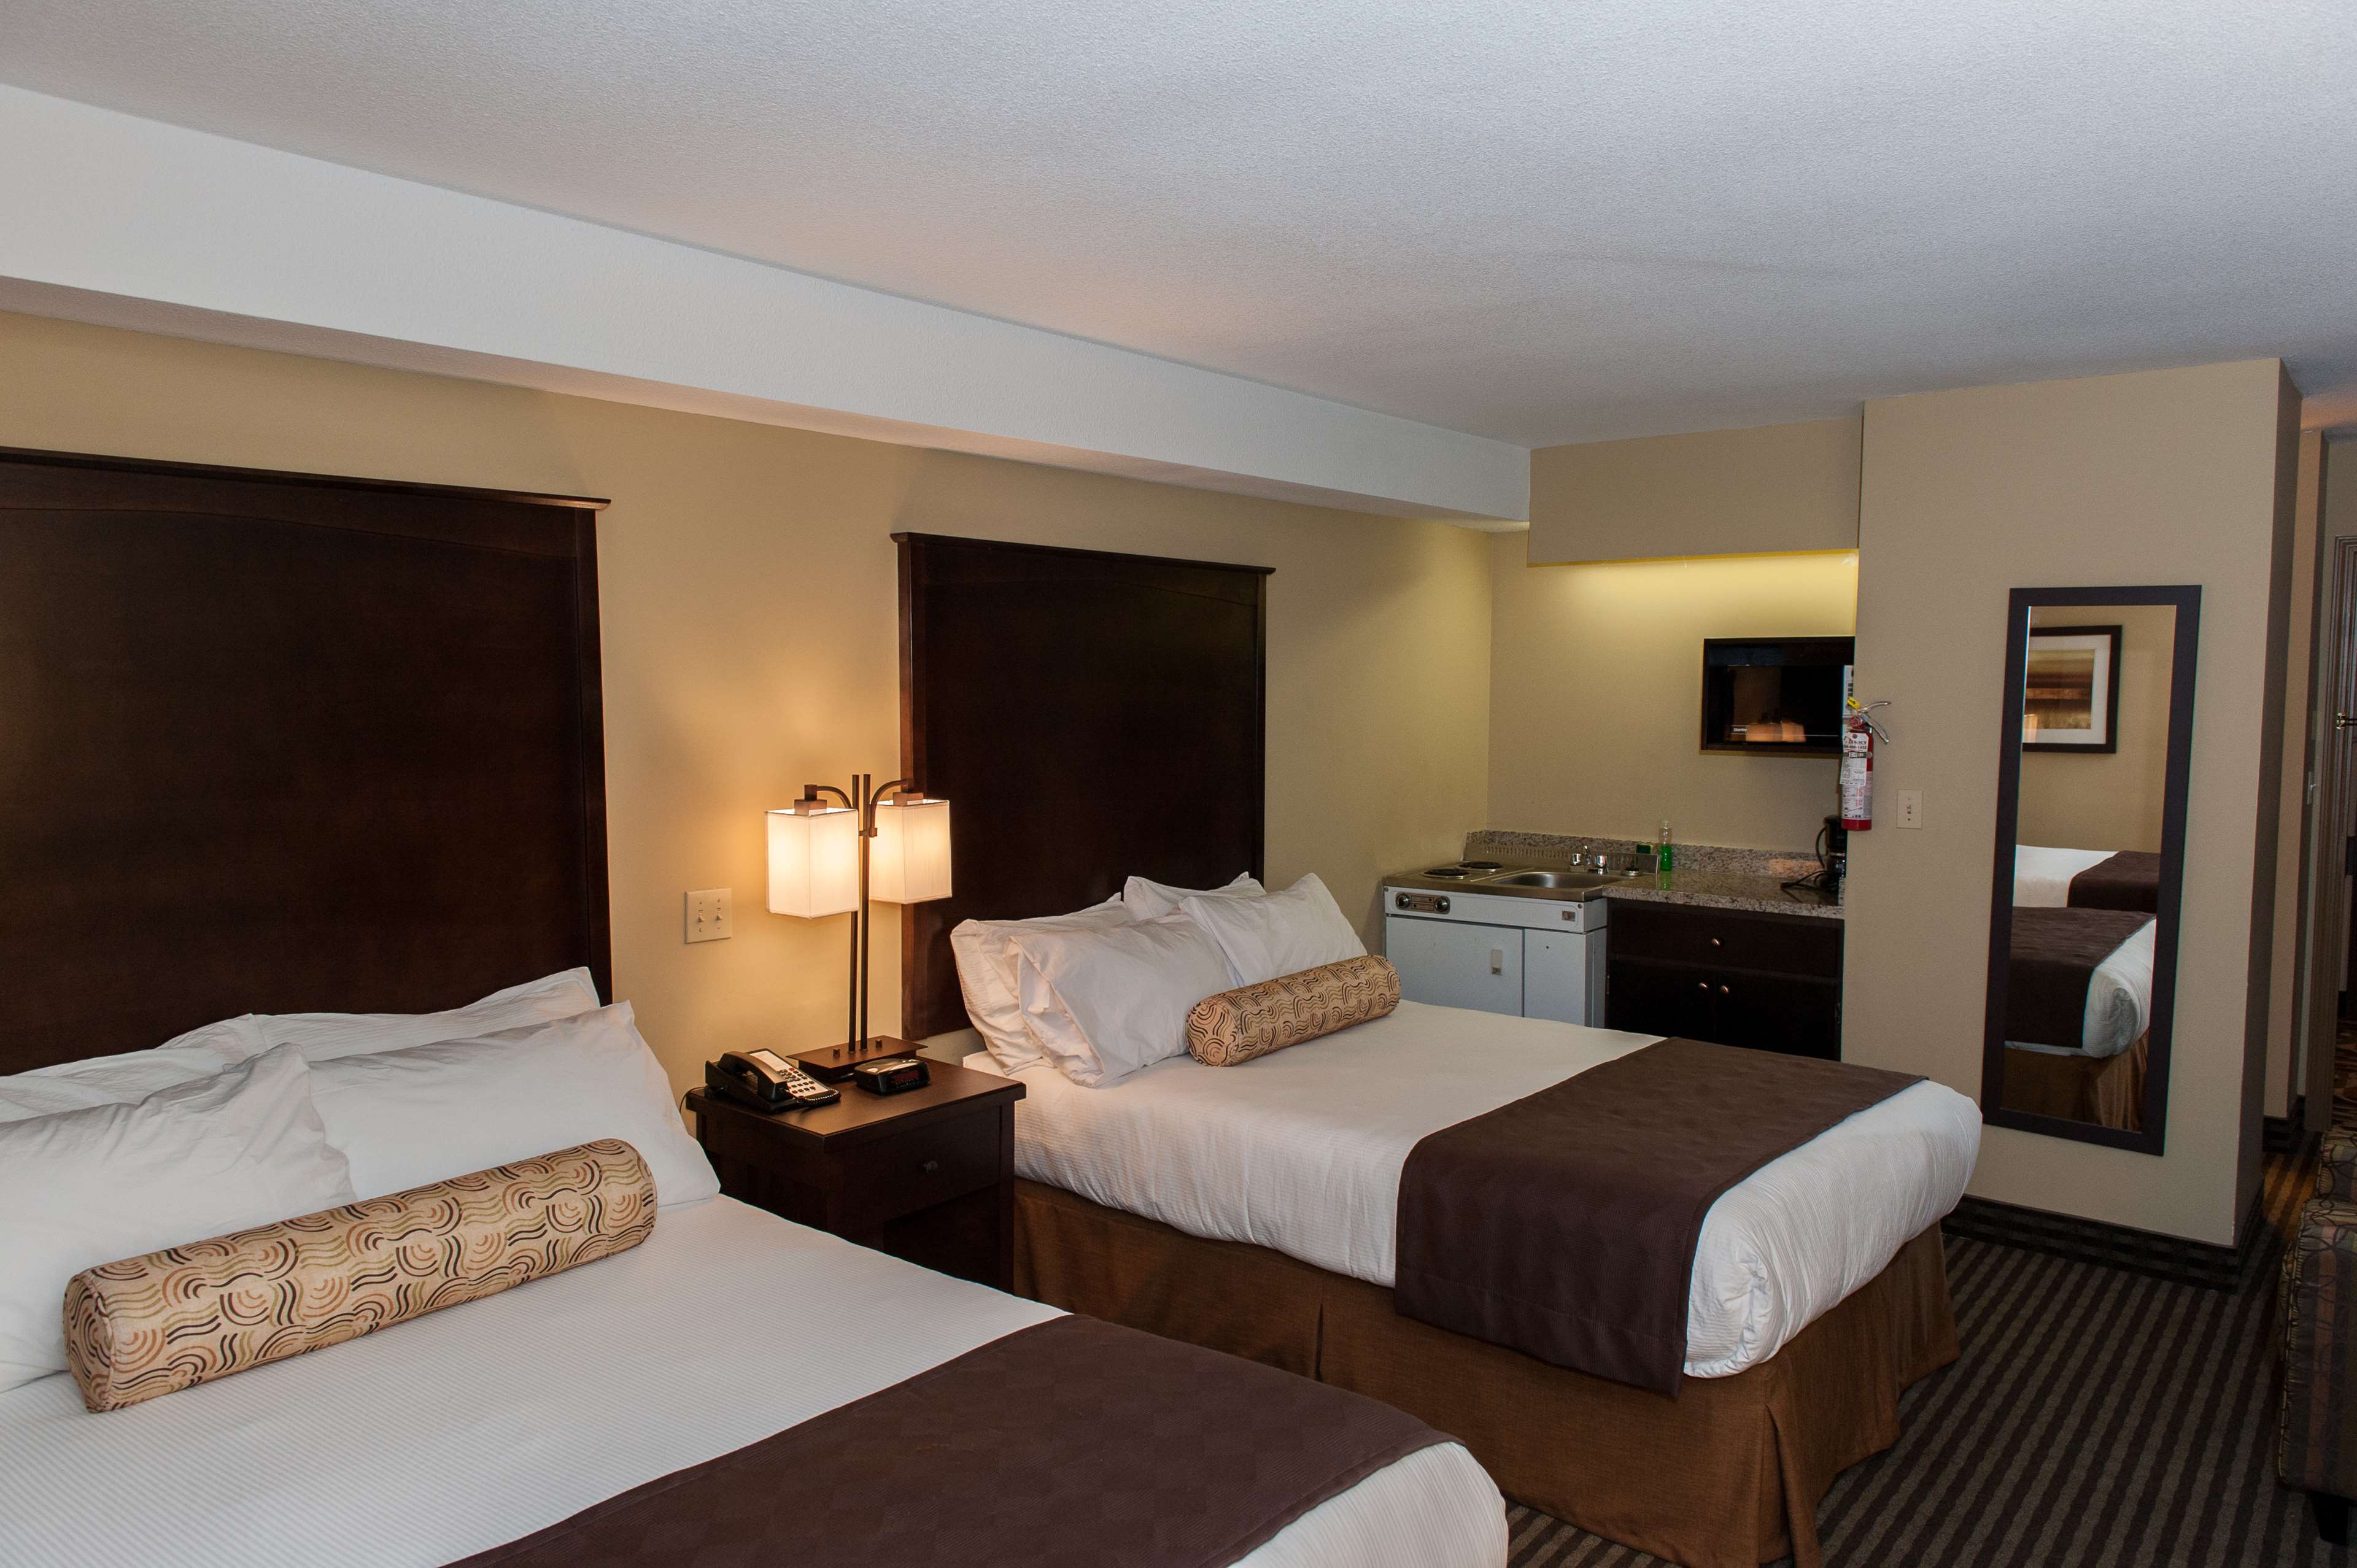 Double Bedded Room with Kitchenette Best Western Maple Ridge Hotel Maple Ridge (604)467-1511